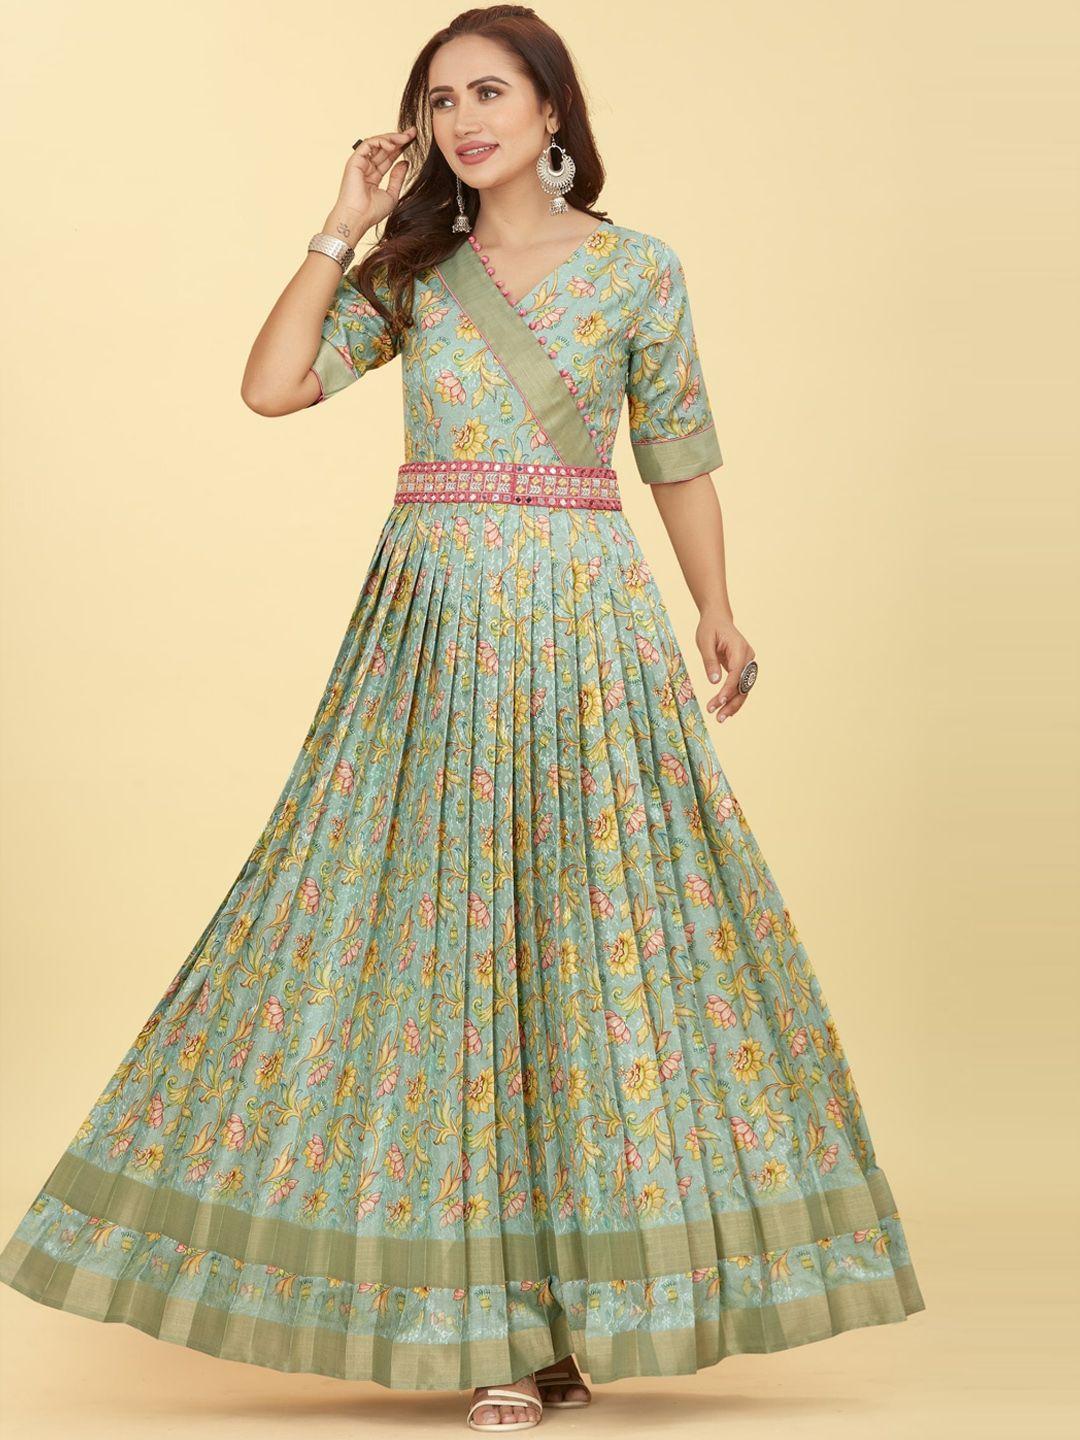 chansi ethnic motifs printed fit & flare silk ethnic dress comes with embellished belt